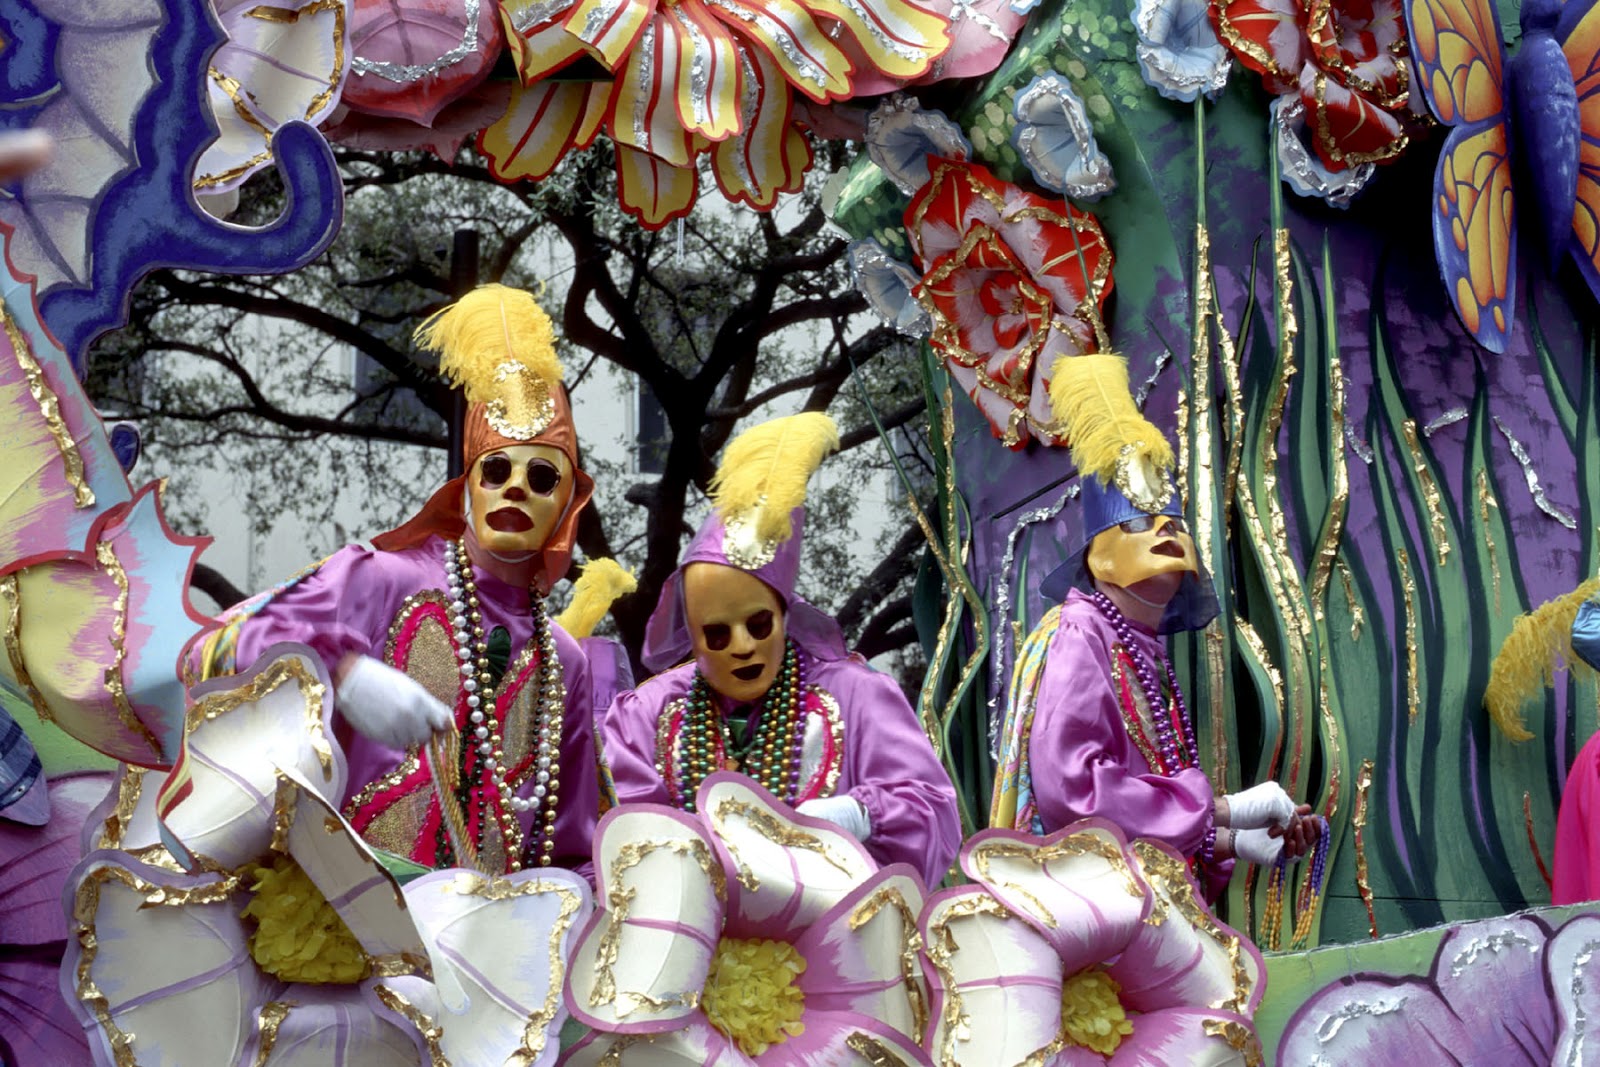 PicturesPool Mardi Gras Parade Fat Tuesday masquerade mask